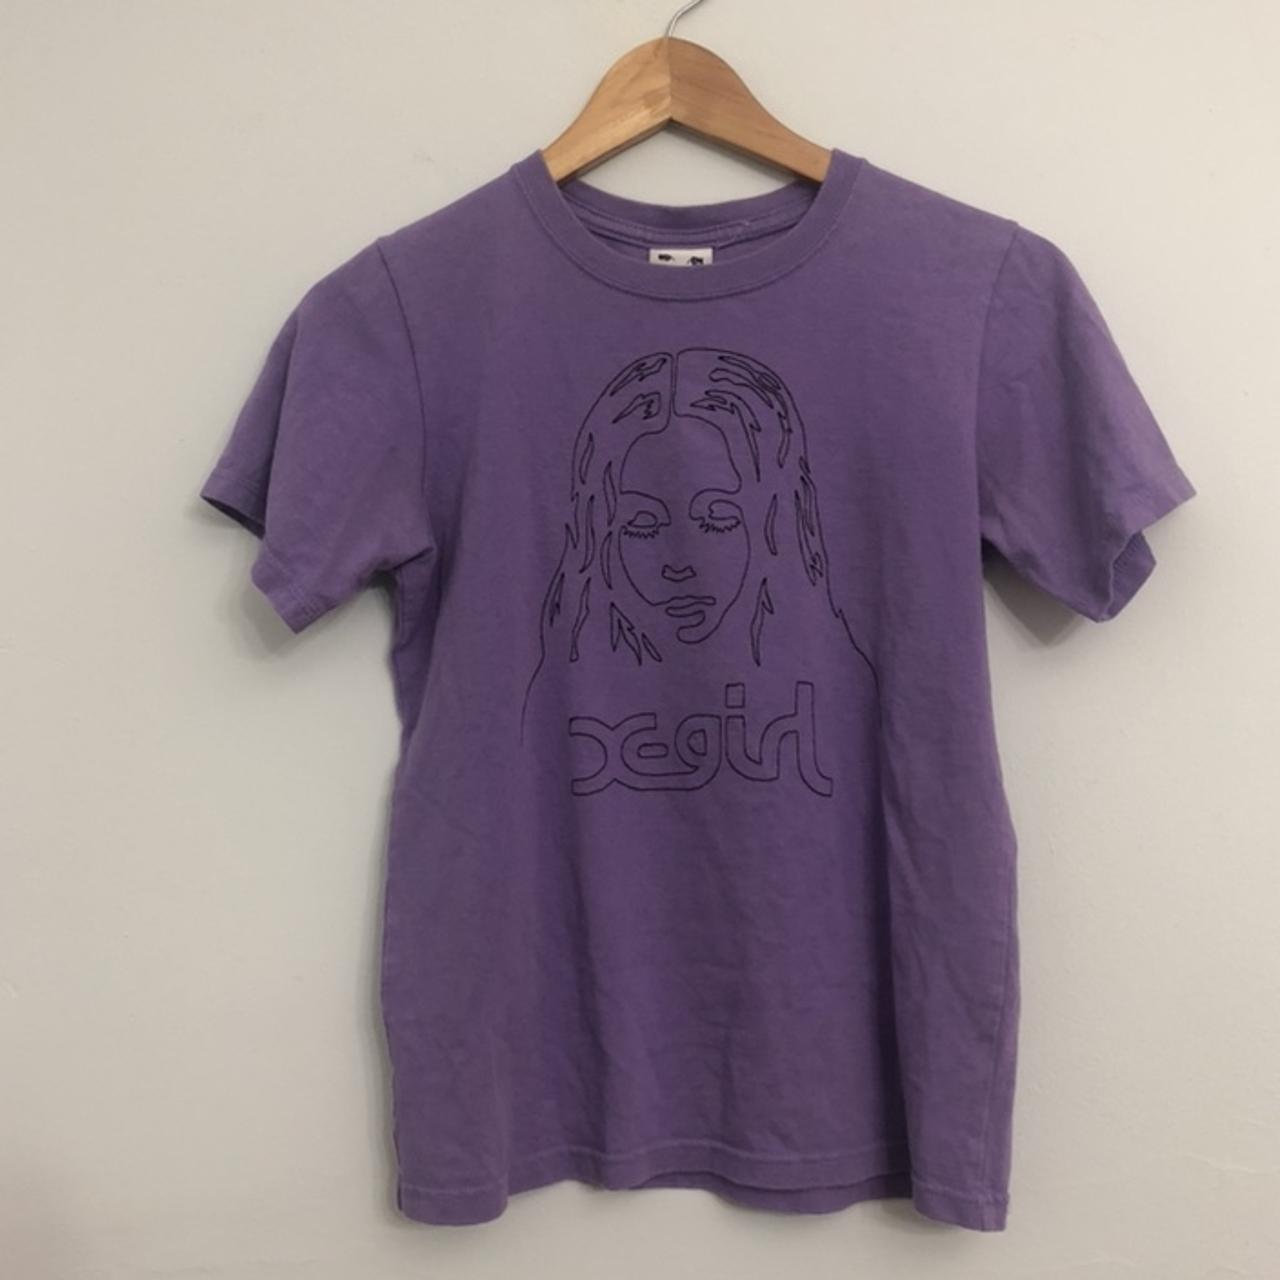 X-Girl  Women's Black and Purple T-shirt